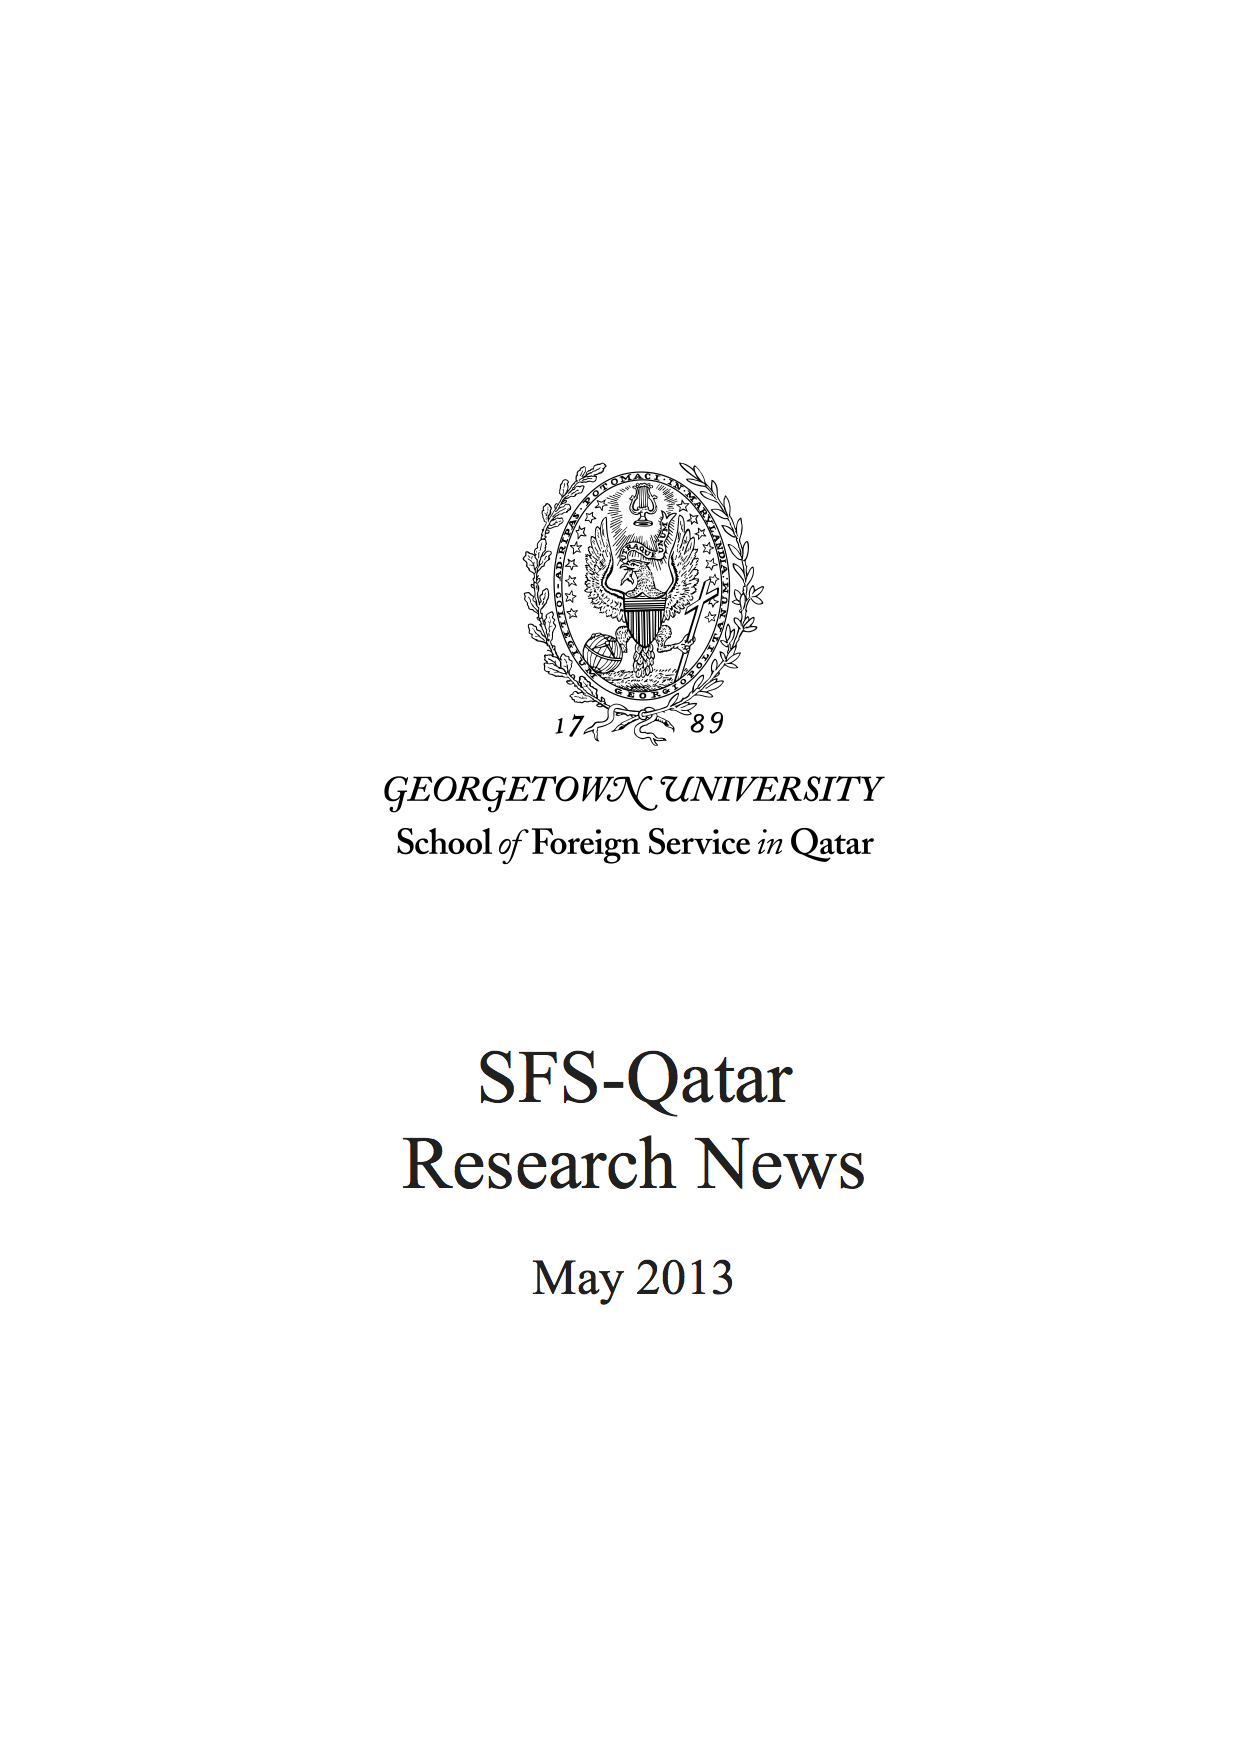 SFS-Qatar Research News May 2013